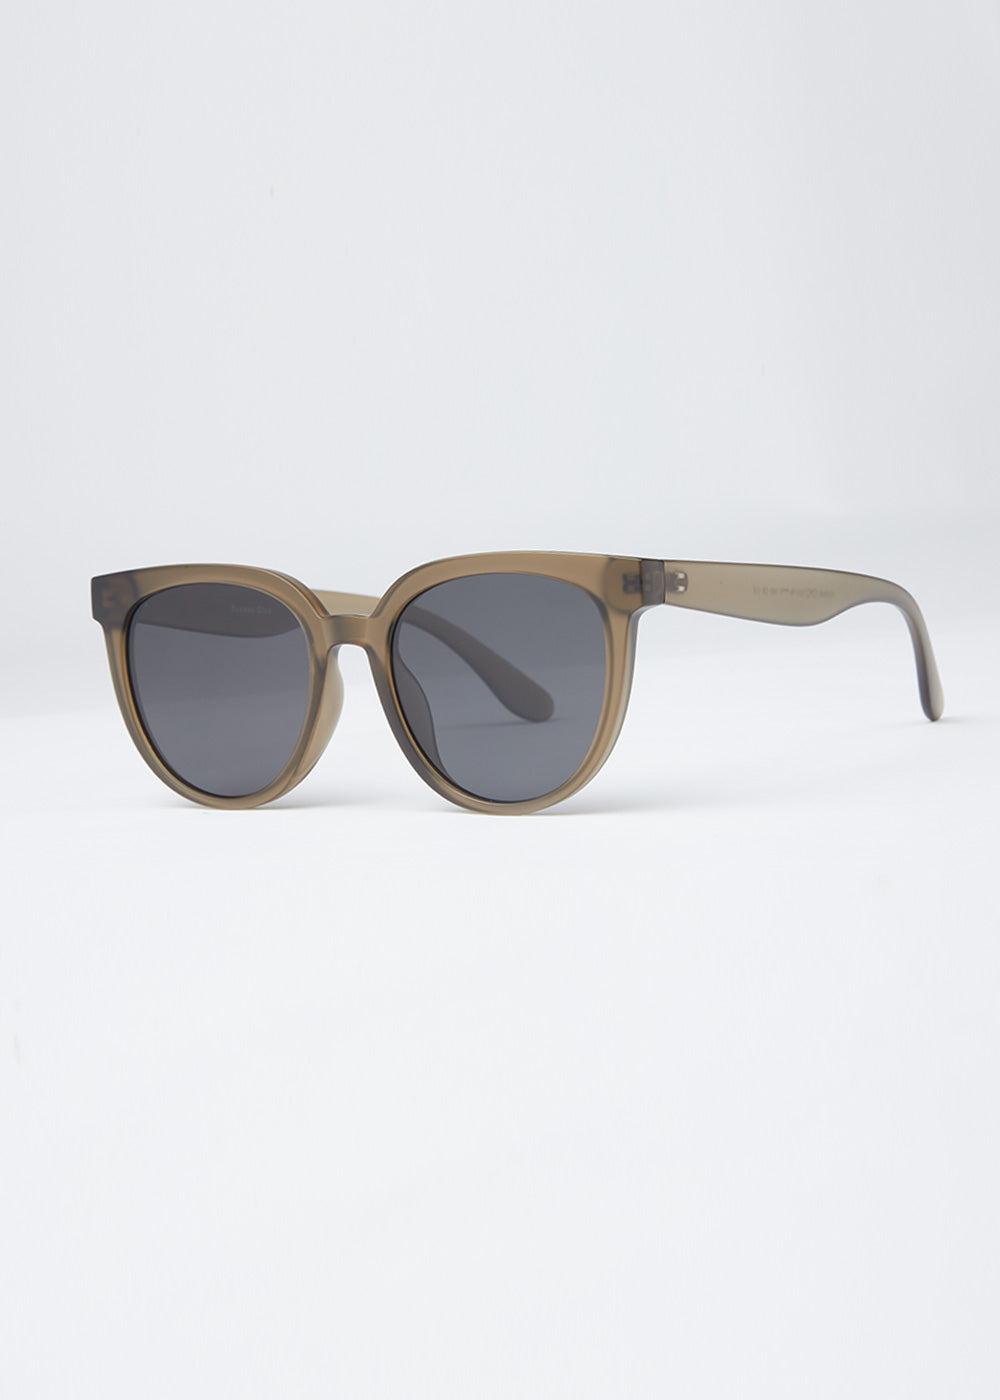 Fern Green Unisex Oval Sunglasses